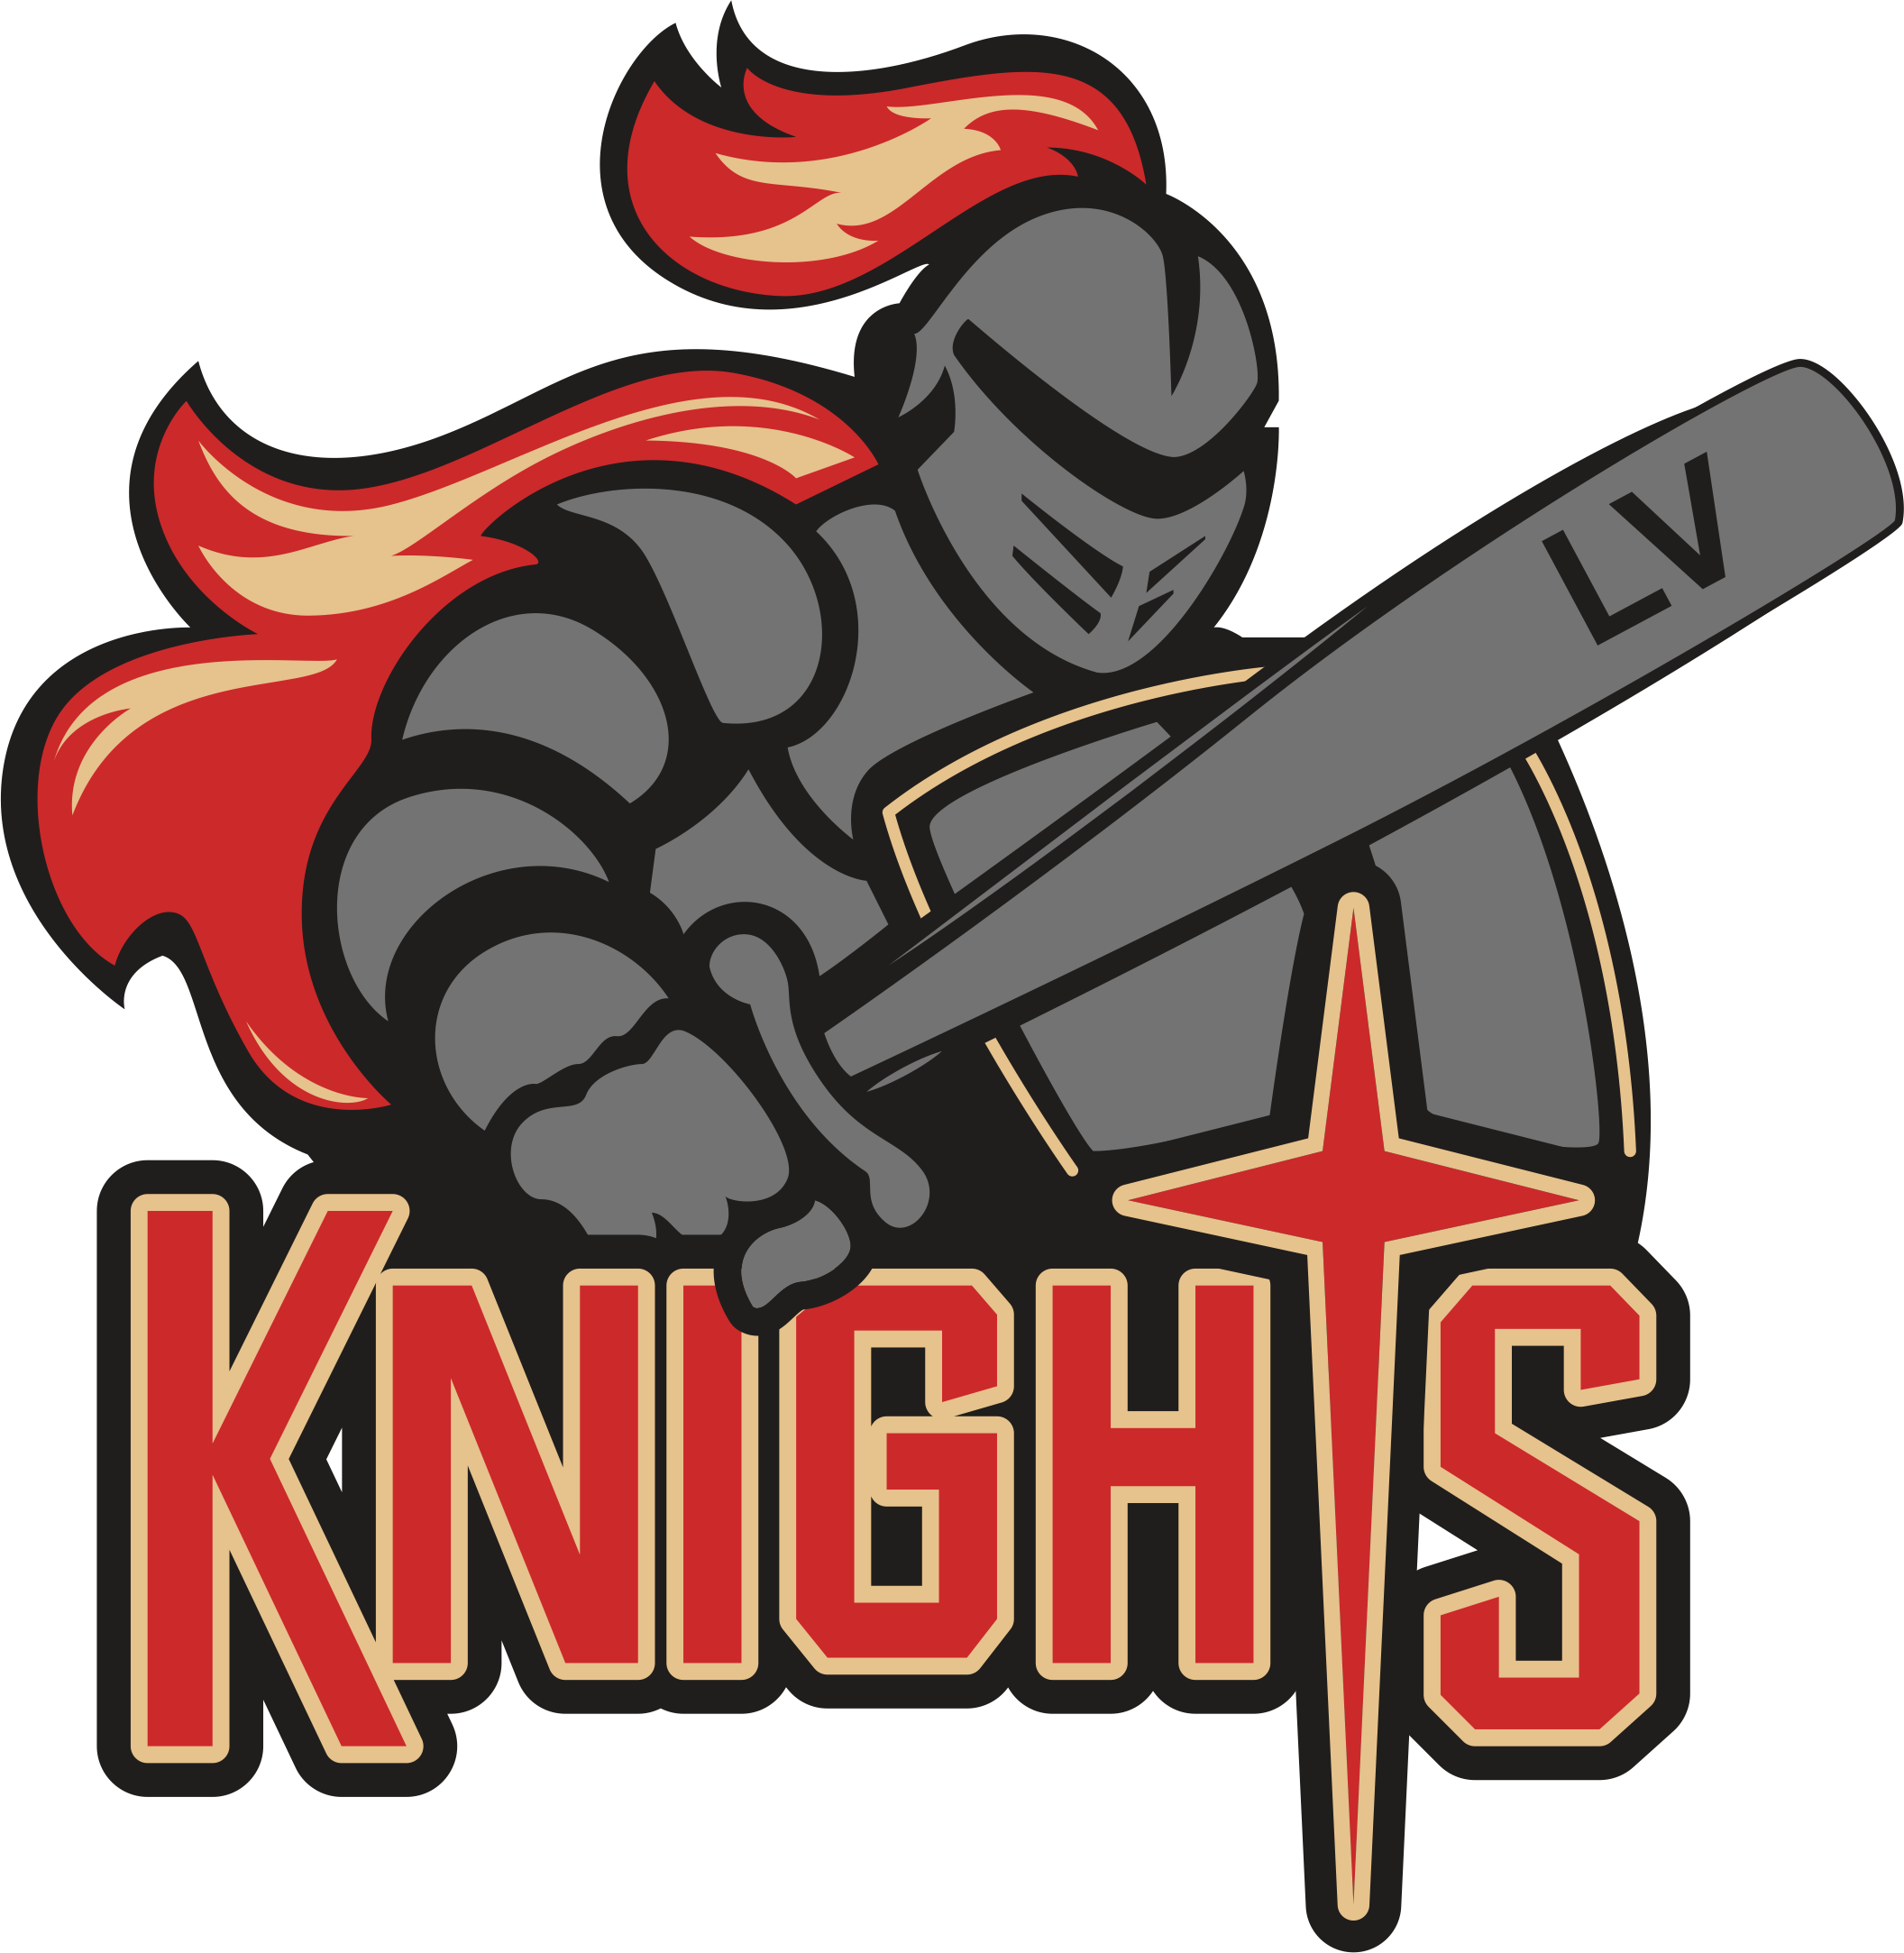 LV Knights Baseball